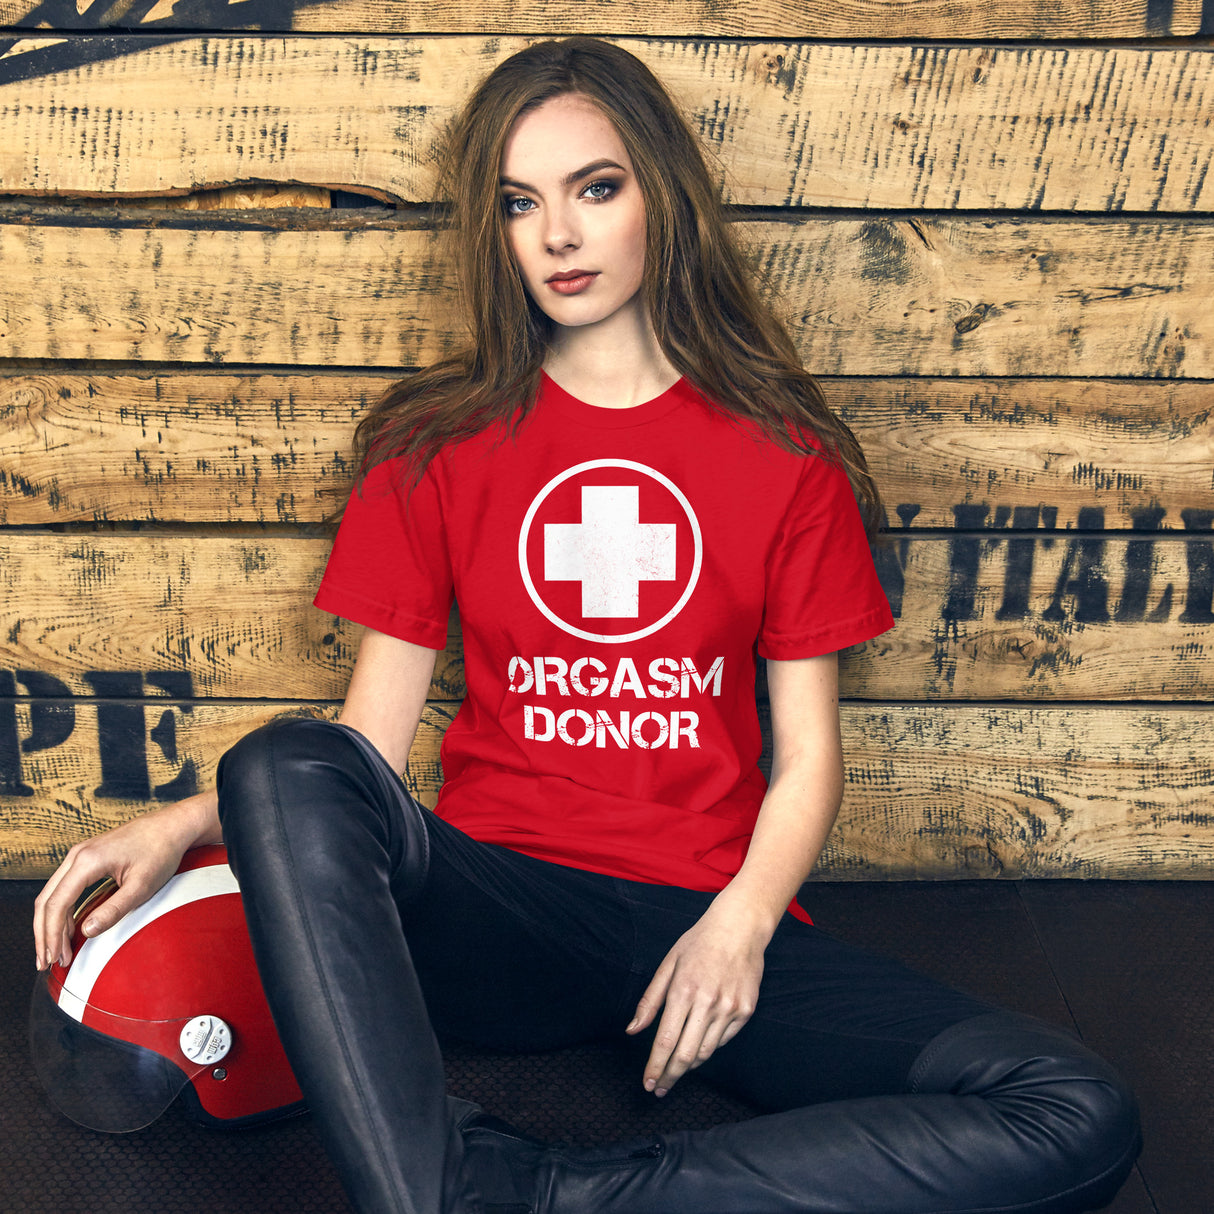 Orgasm Donor Women's Shirt